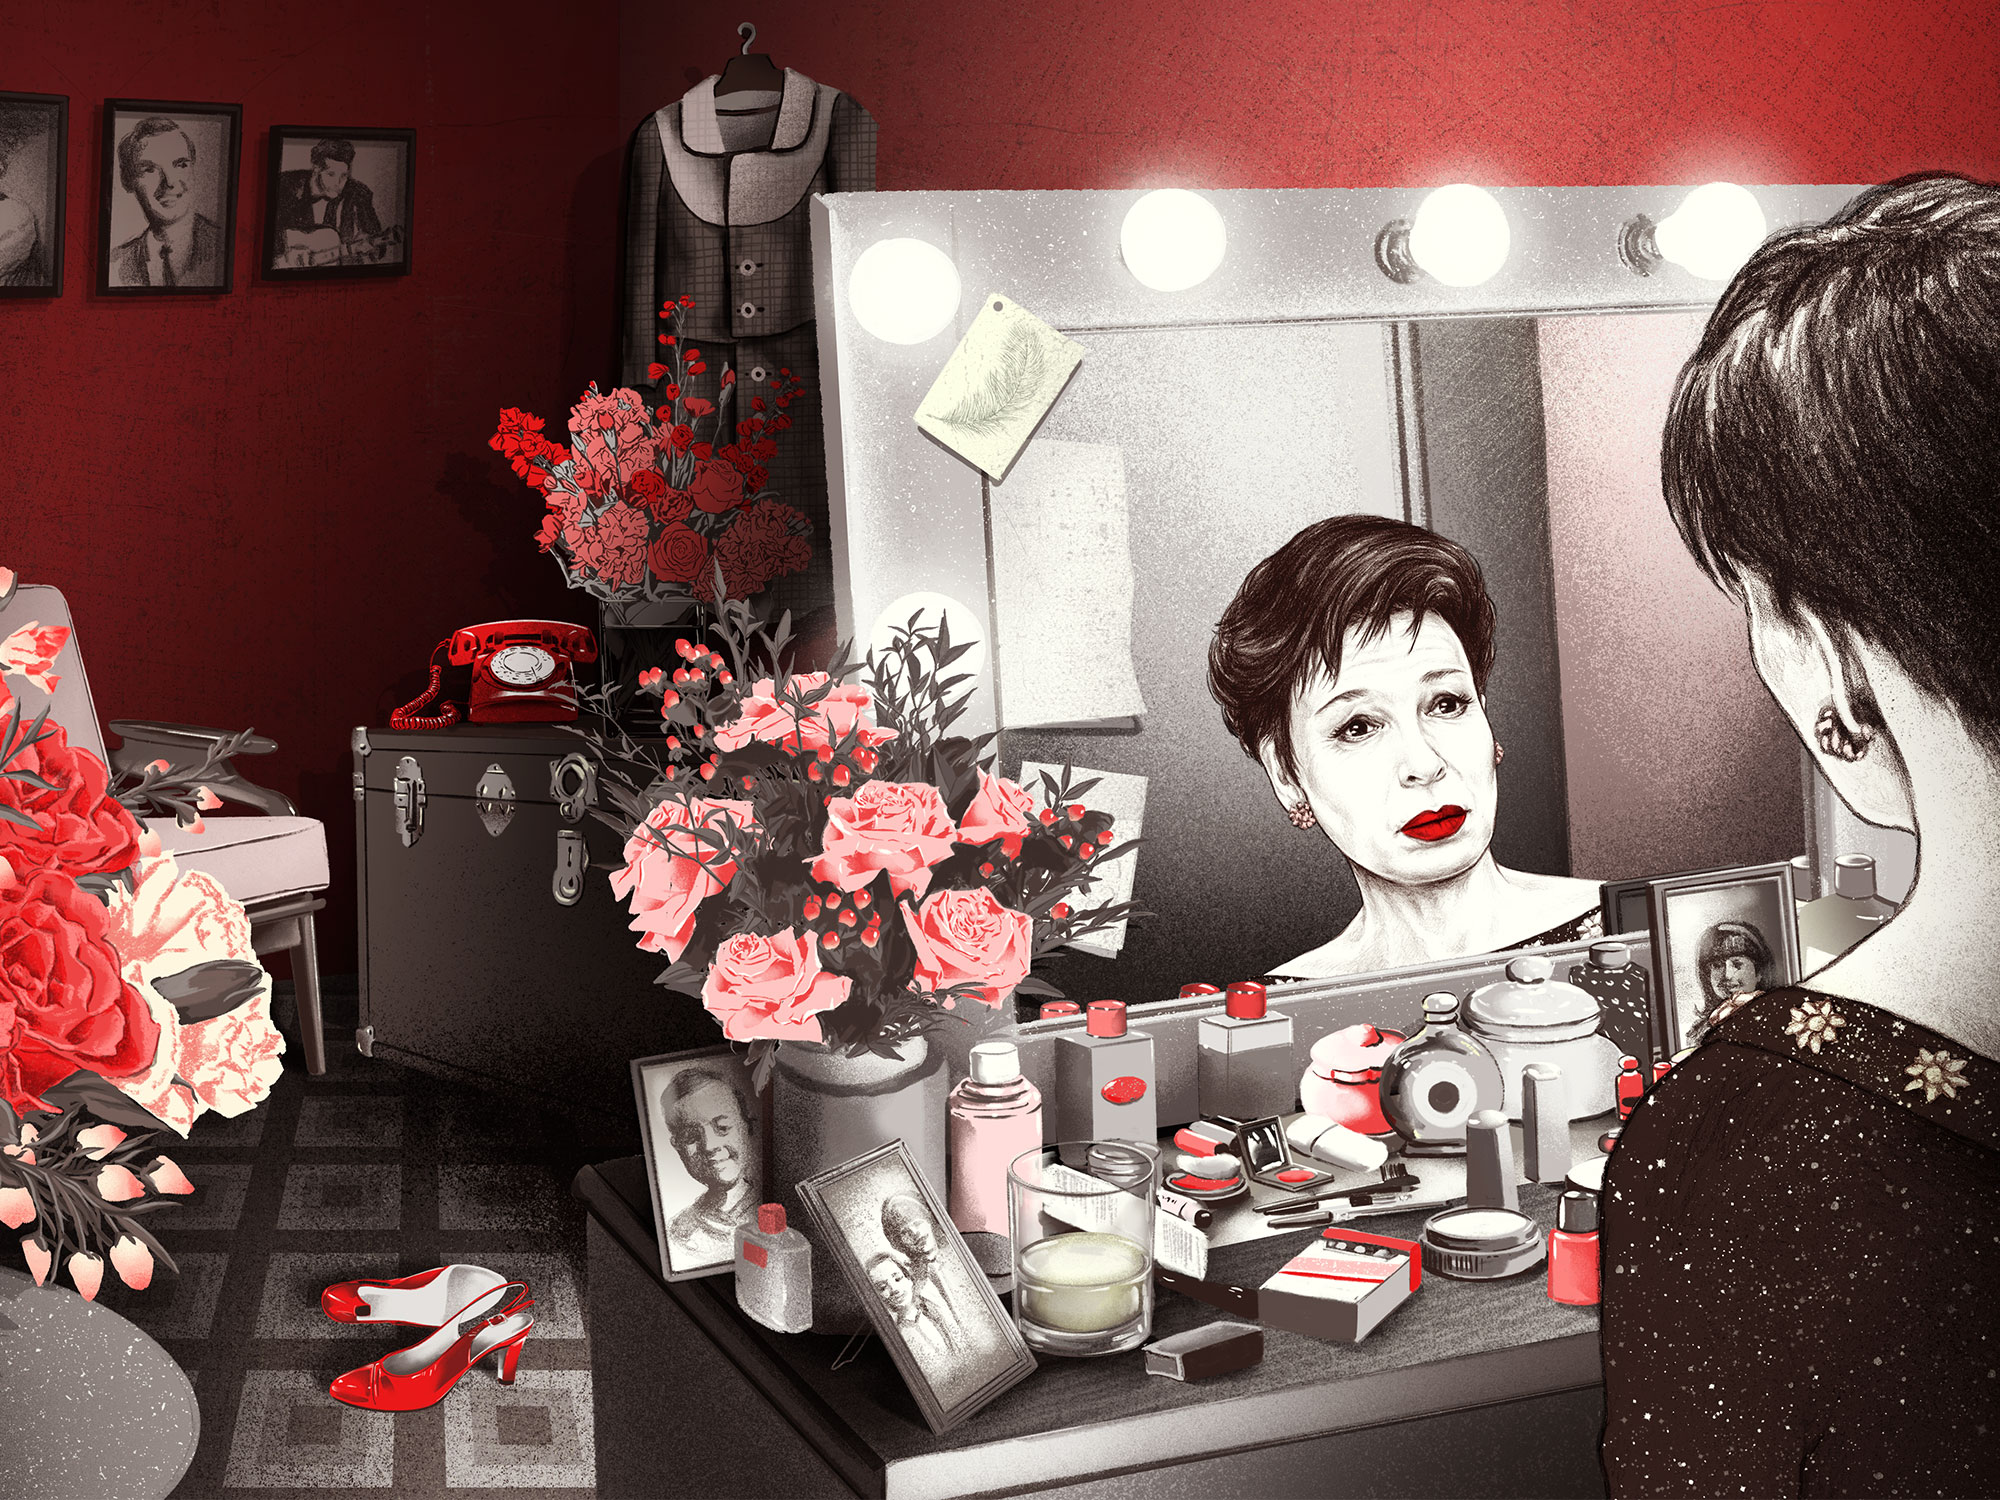 Renée Zellweger as Judy Garland illustration by Jennifer Dionisio